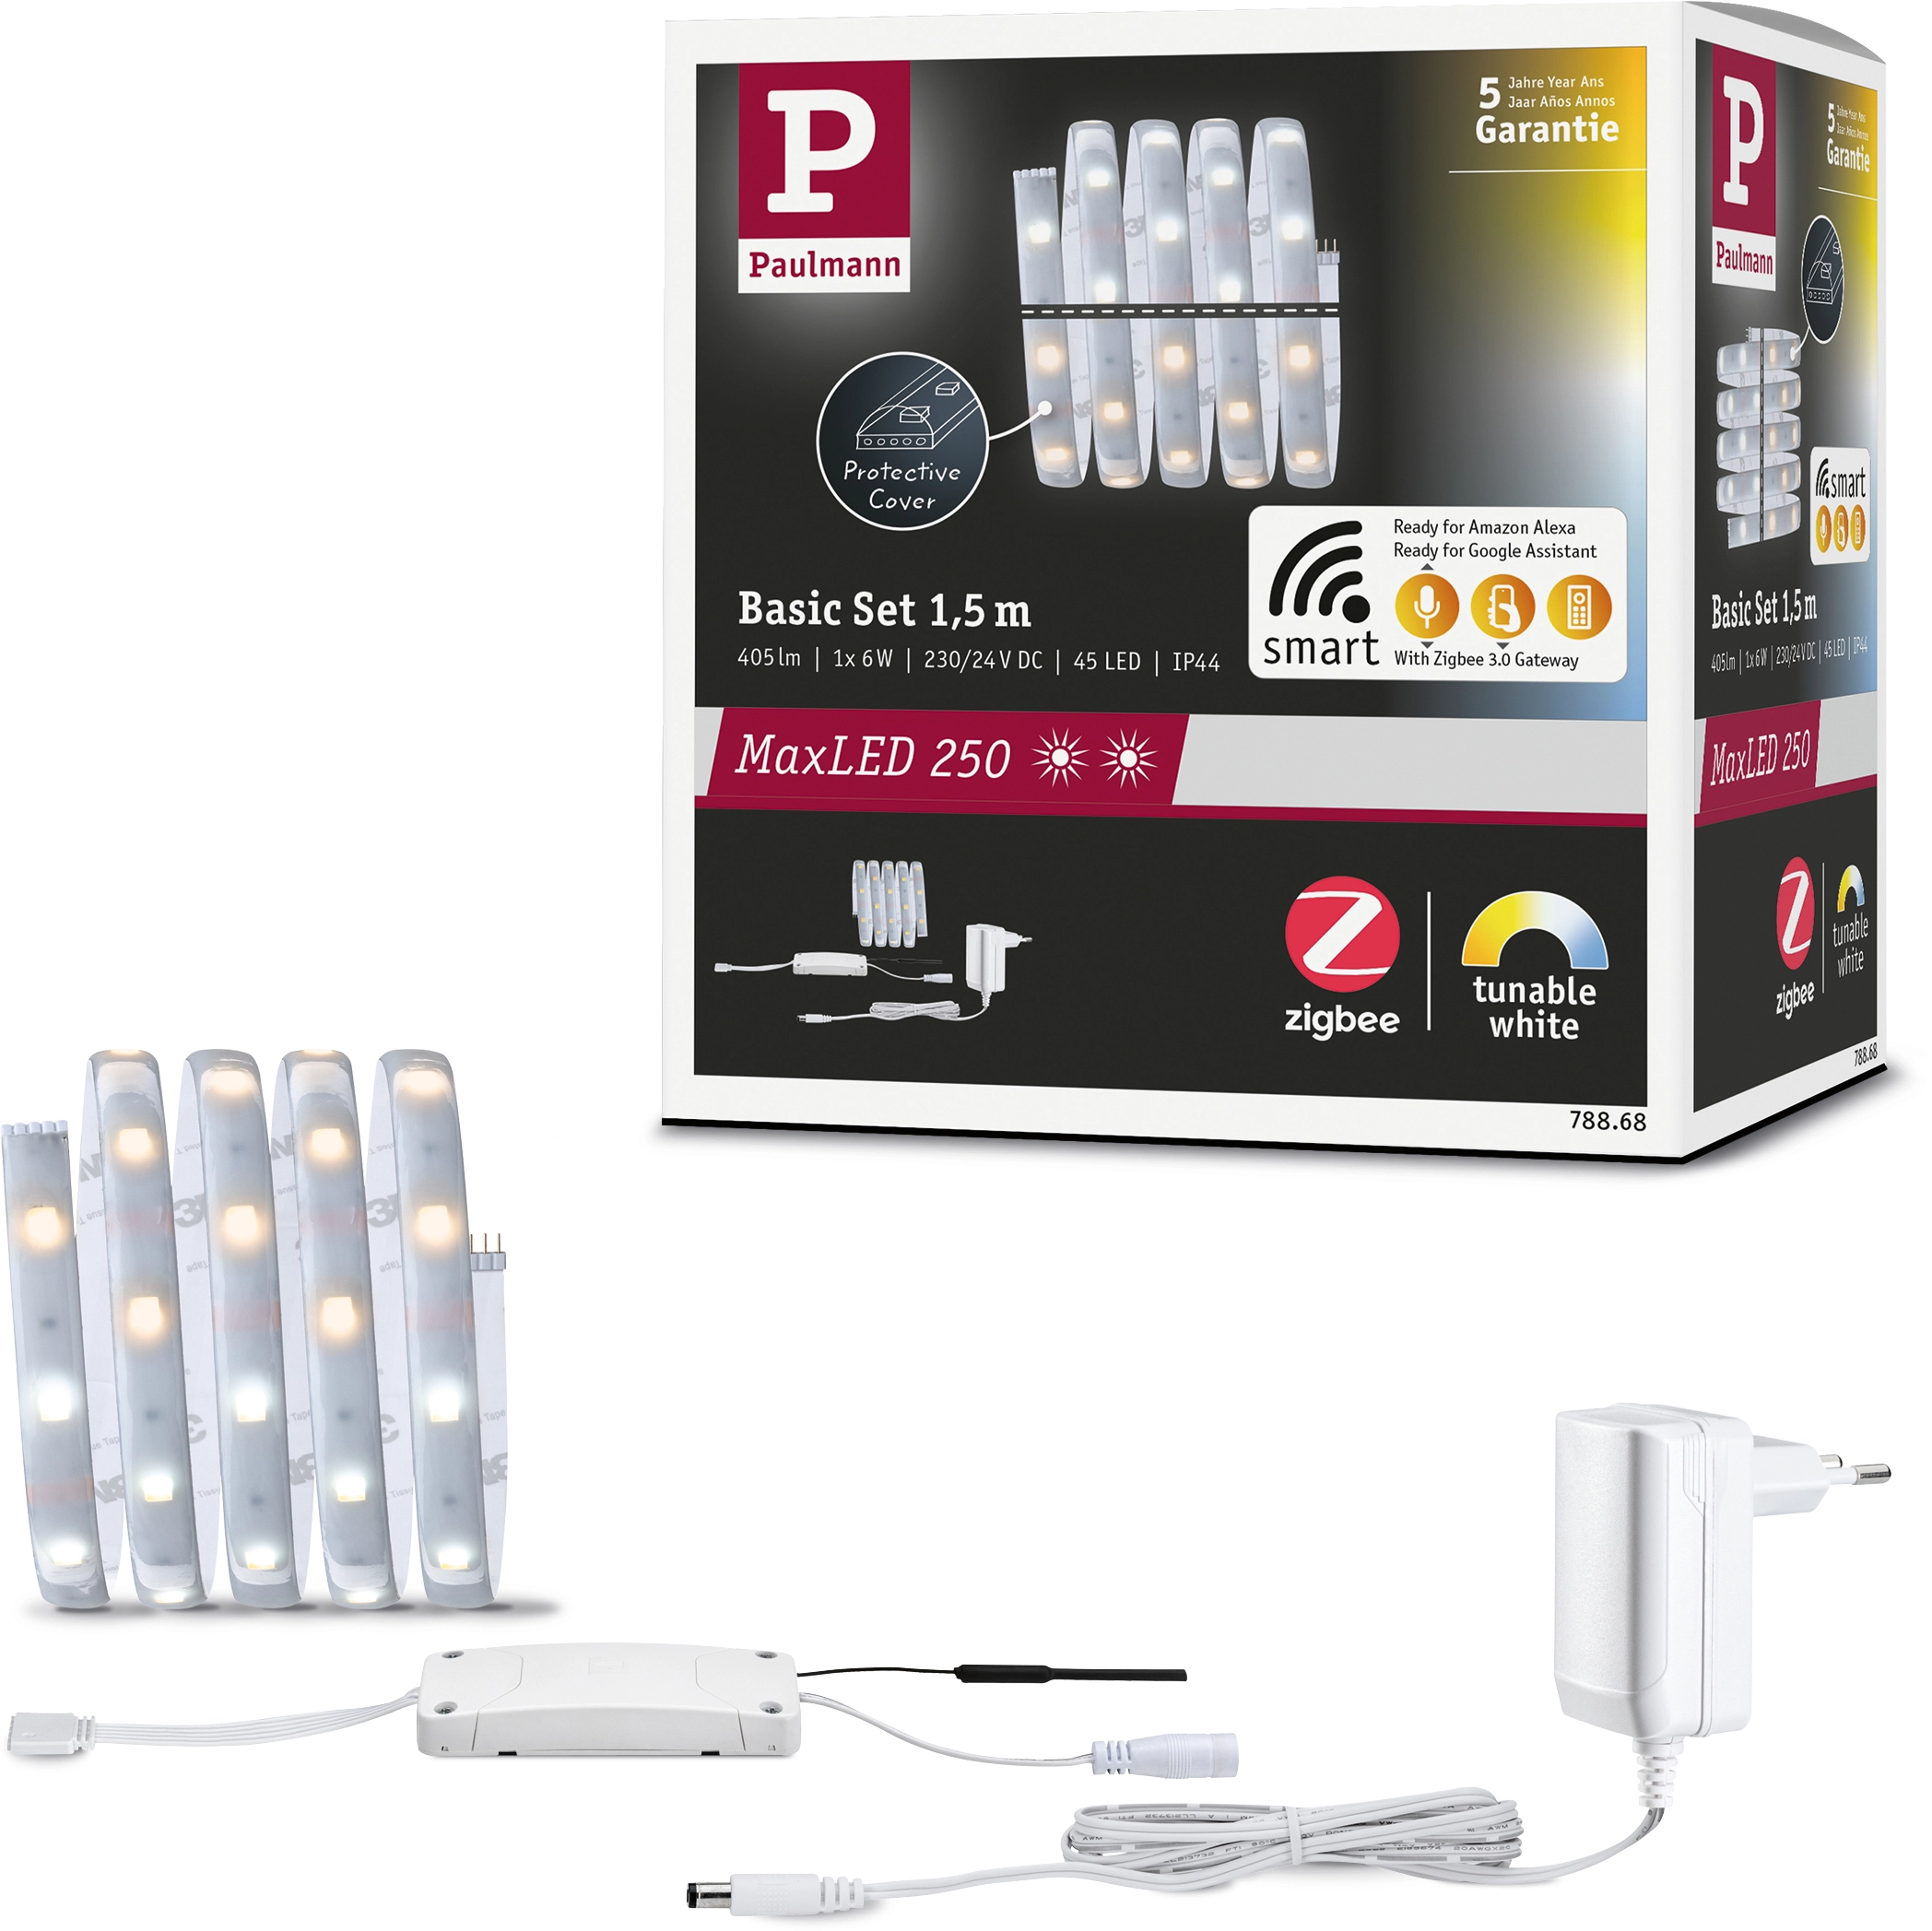 bei Tunable Home OBI 1,5 250 MaxLED Basis-Set Smart Paulmann Strip kaufen LED Weiß Zigbee m